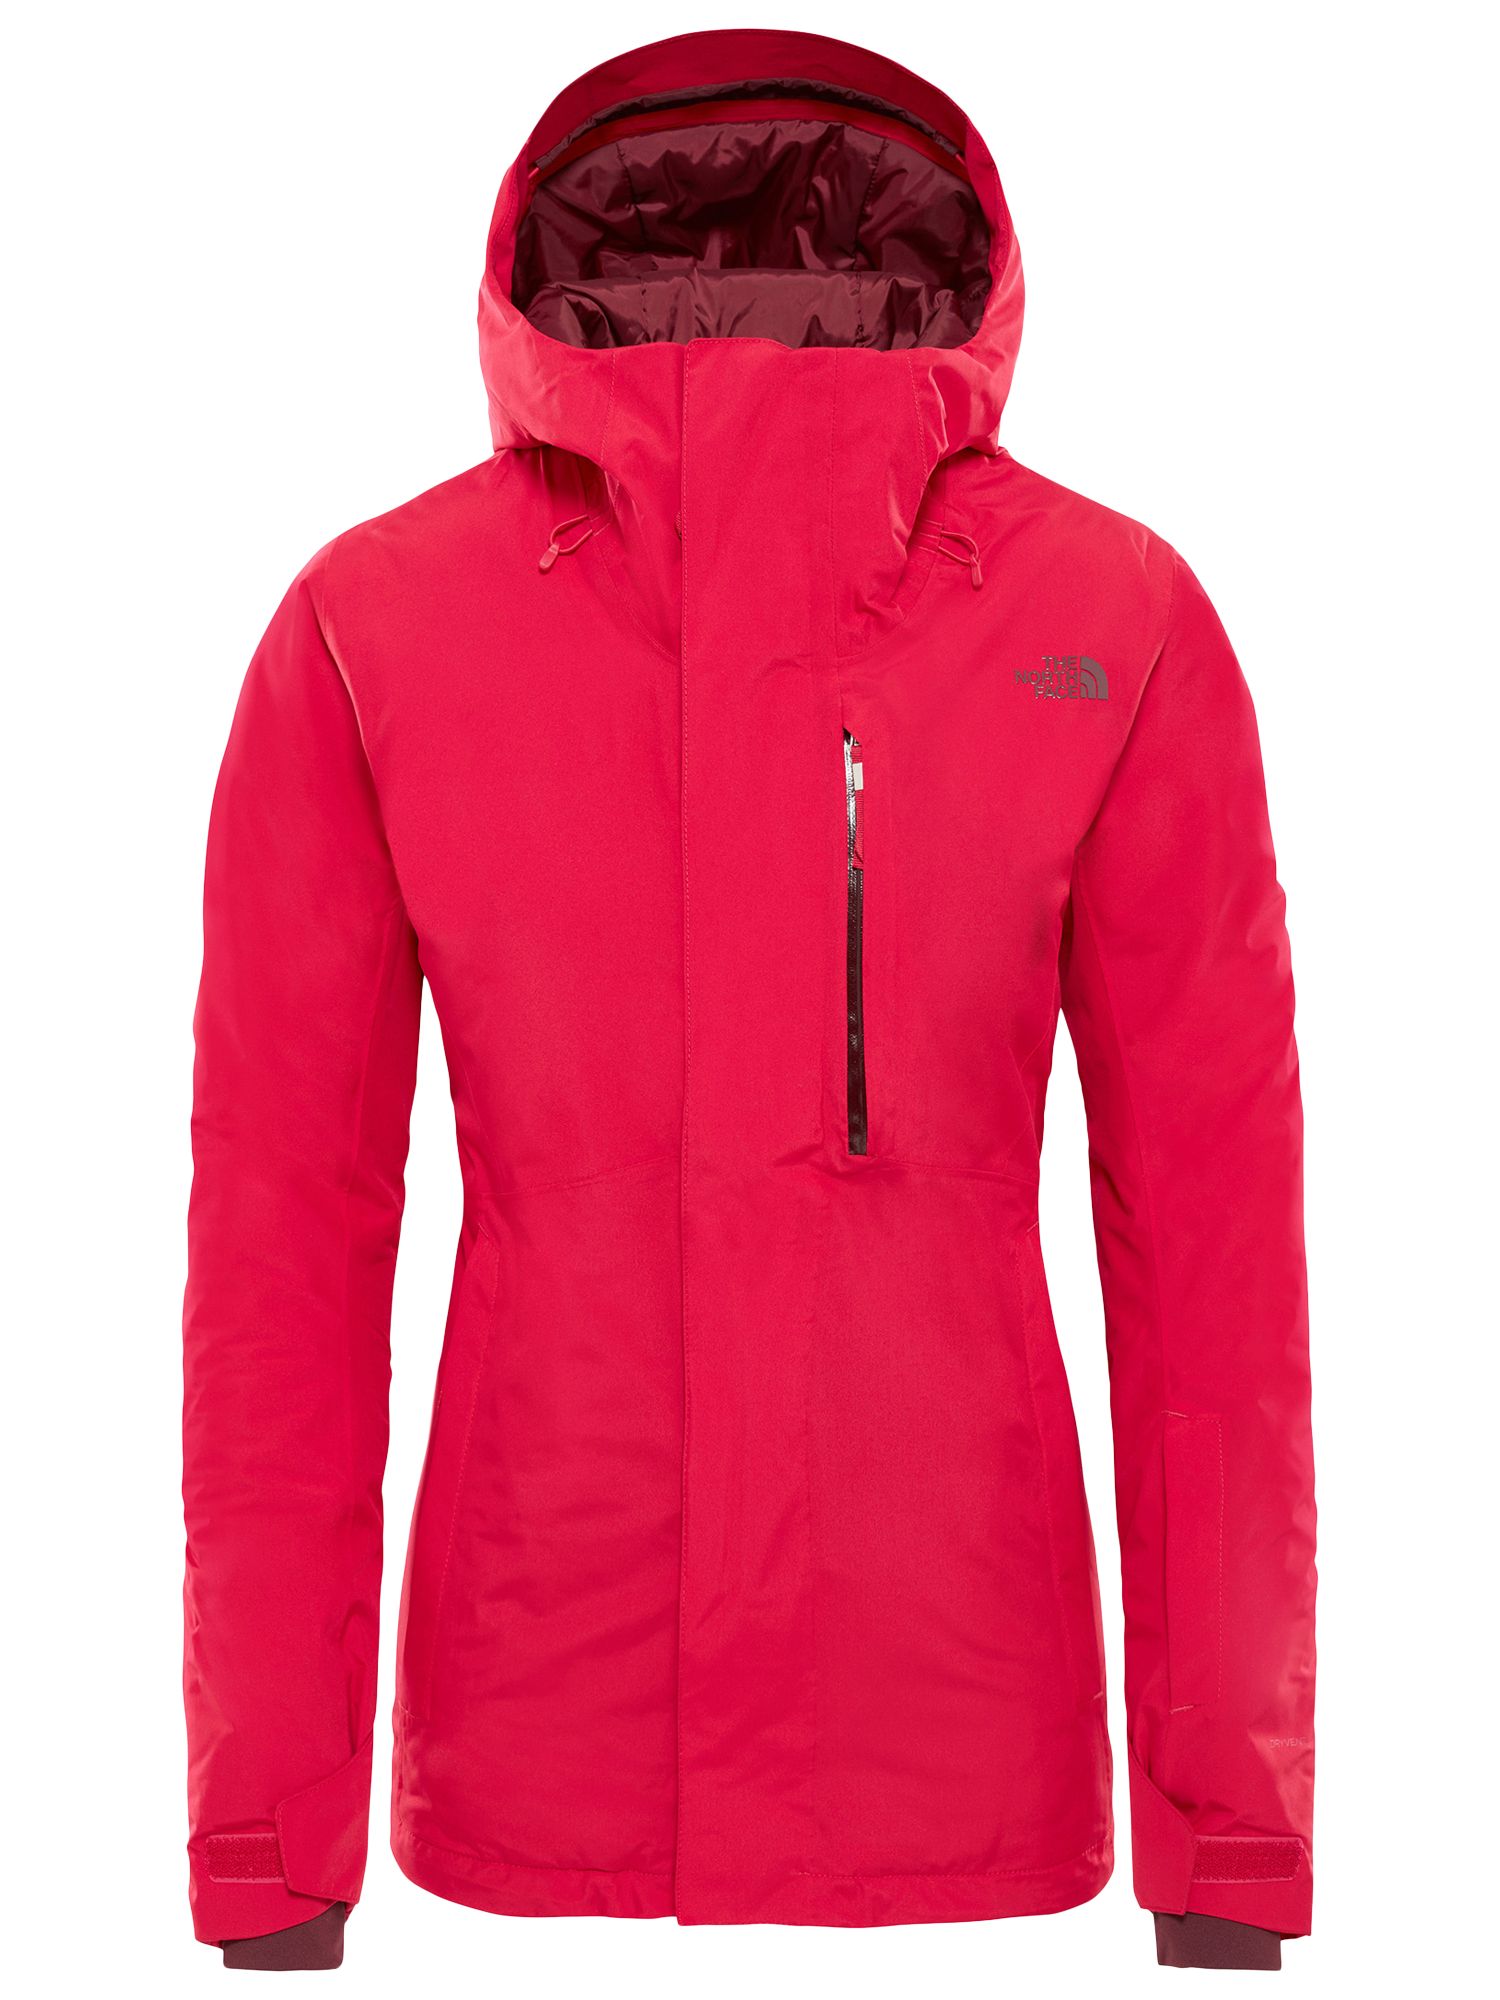 The North Face Descendit Women S Waterproof Ski Jacket Cerise Pink At John Lewis Partners